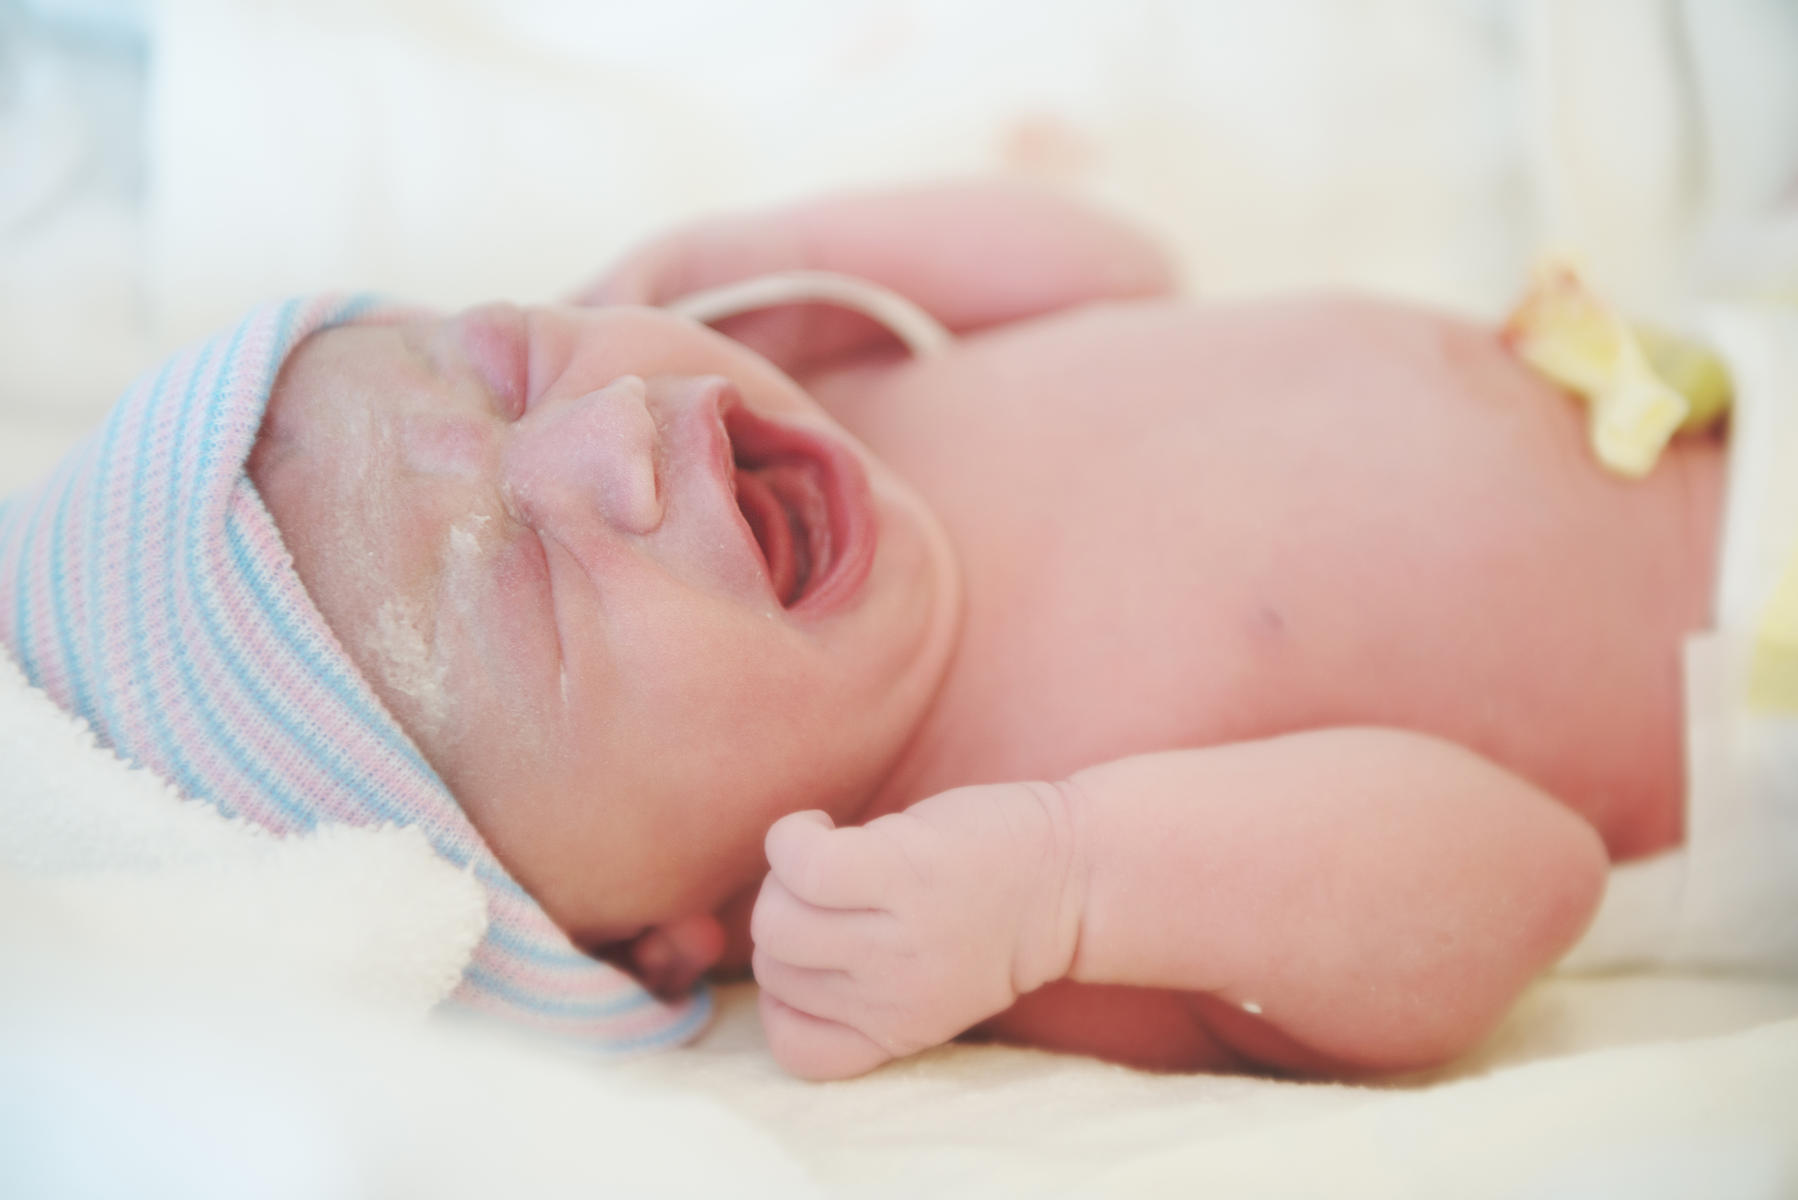 Newborn baby with vernix